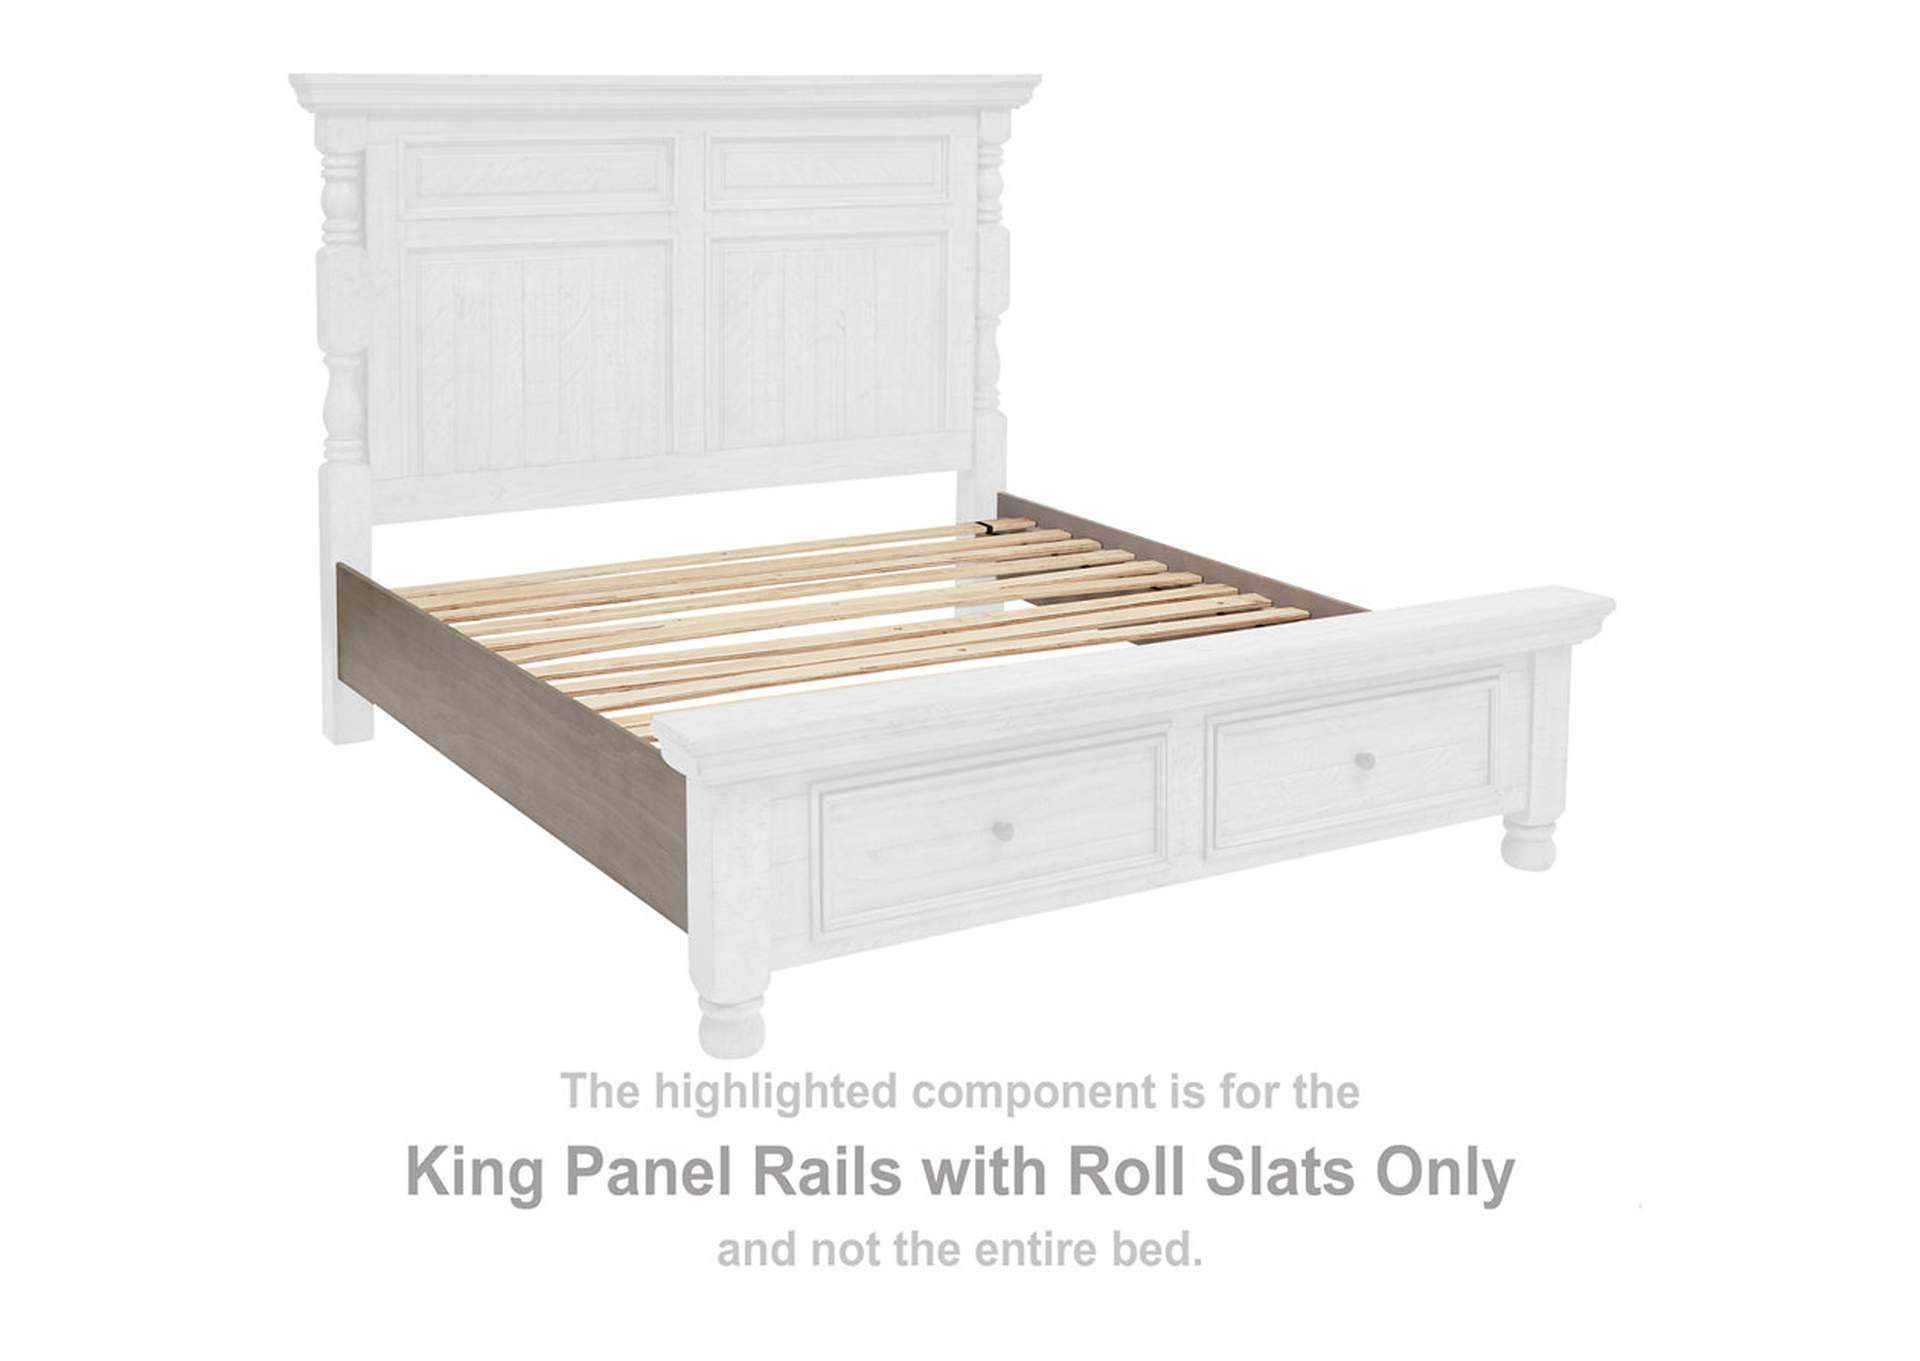 Harrastone King Panel Bed,Millennium